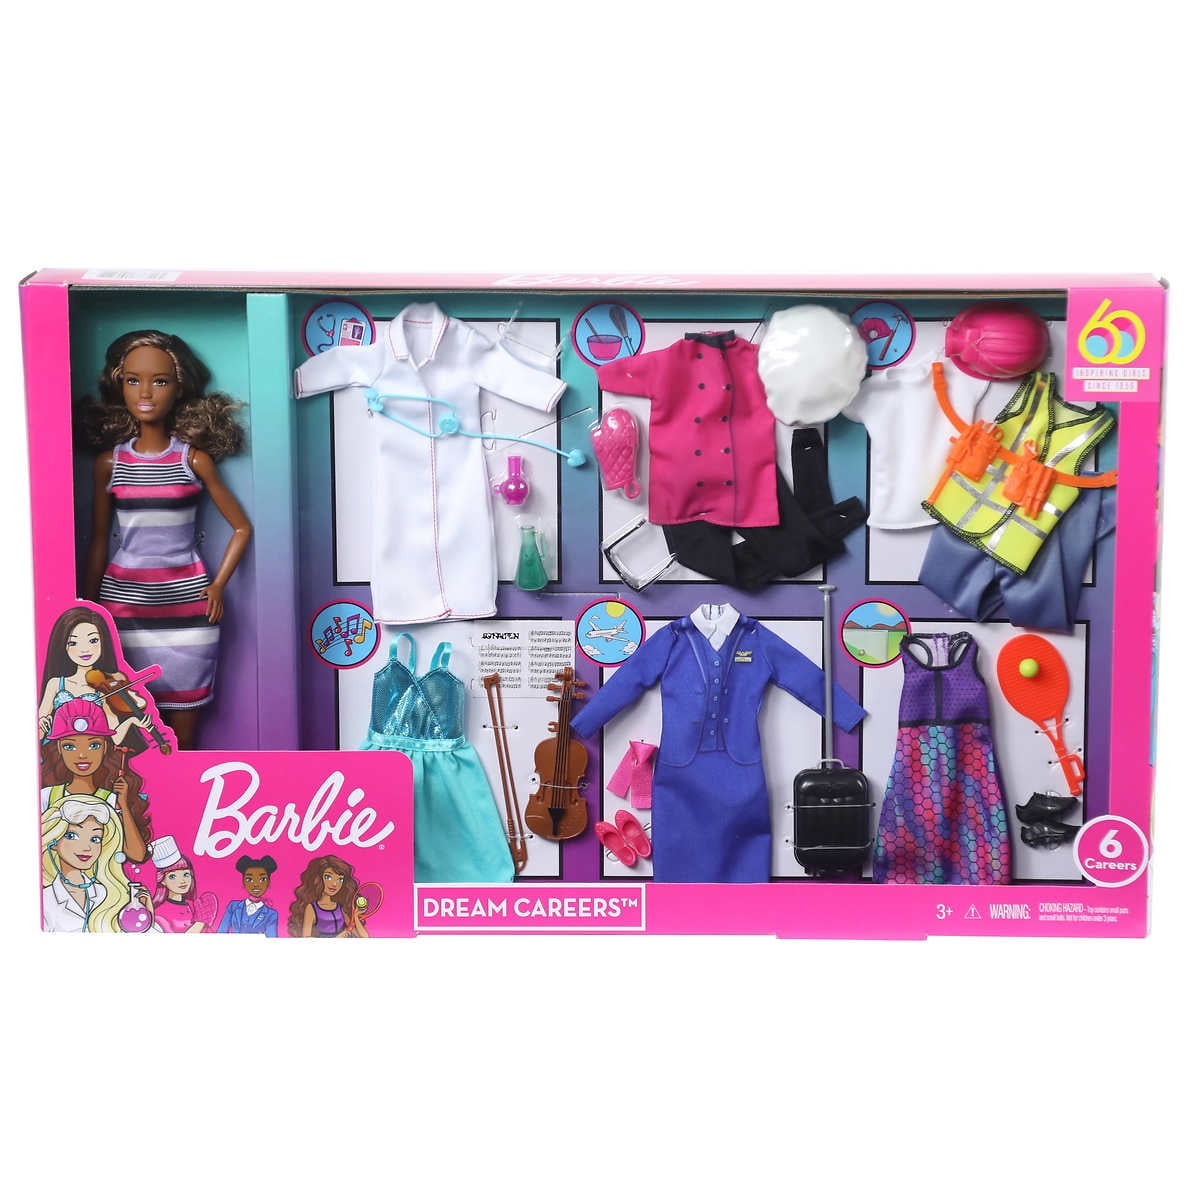 Kit 6 Roupas Da Barbie